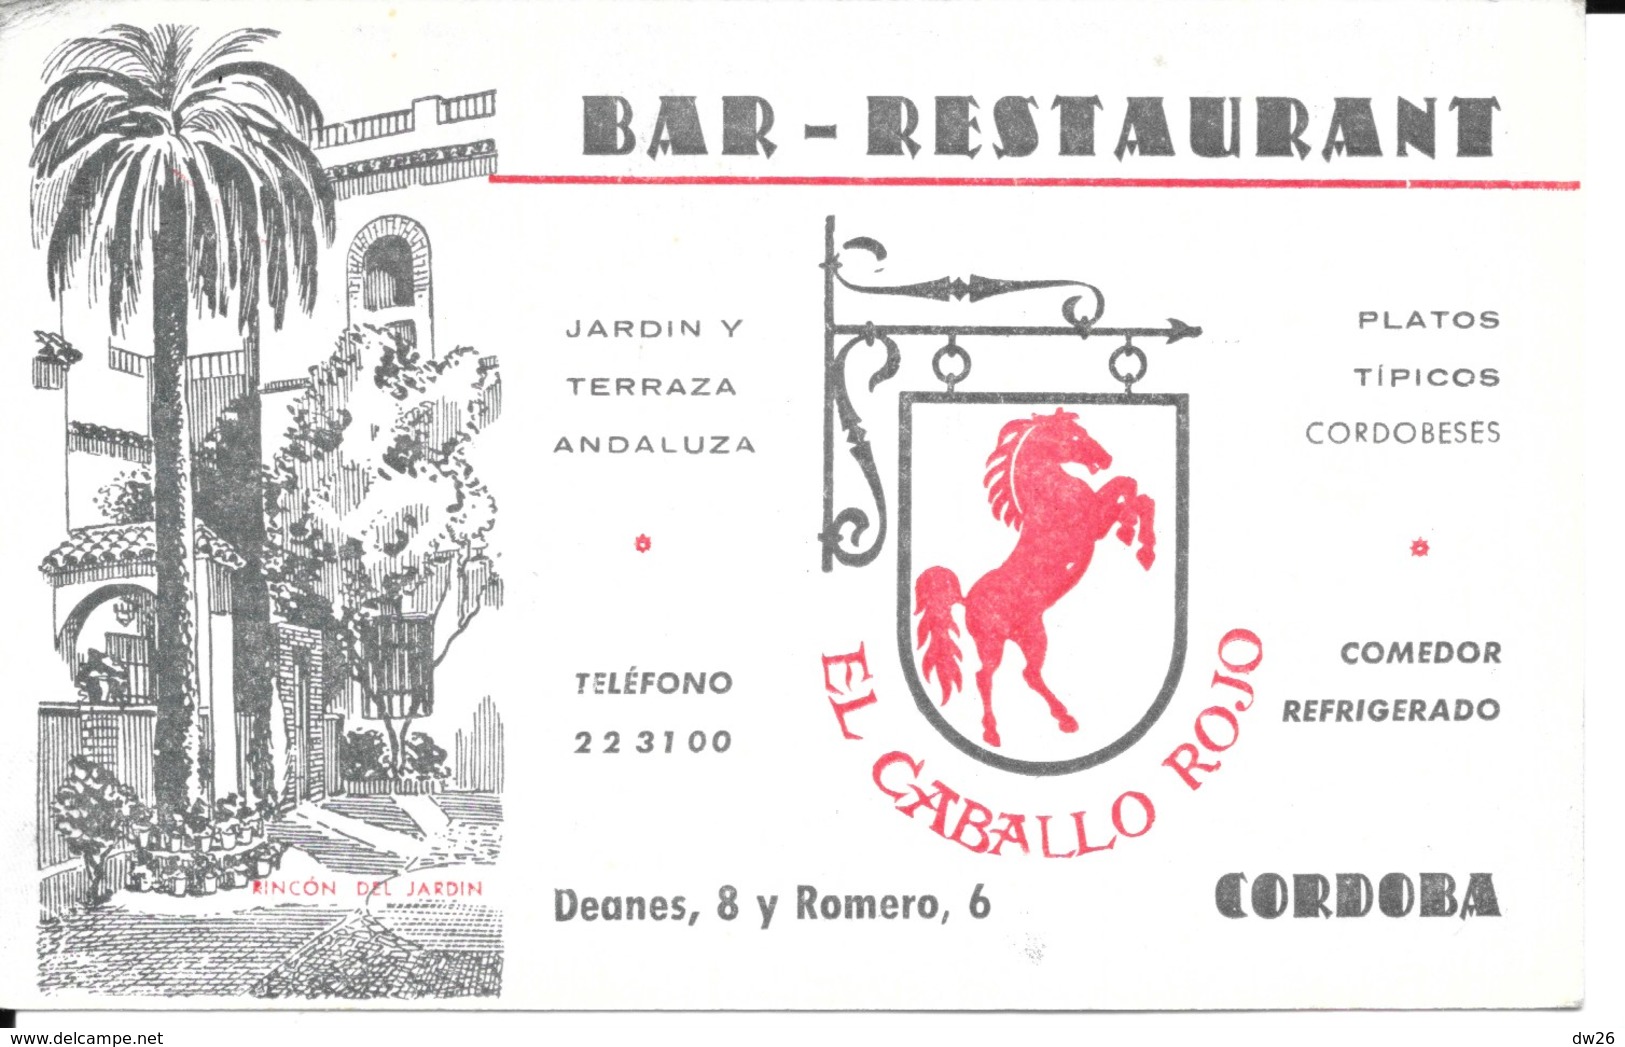 Carte De Visite Publicitaire - Bar-Restaurant El Caballo Rojo, Cordoba (Jardin Y Terraza Andaluza) - Cartes De Visite